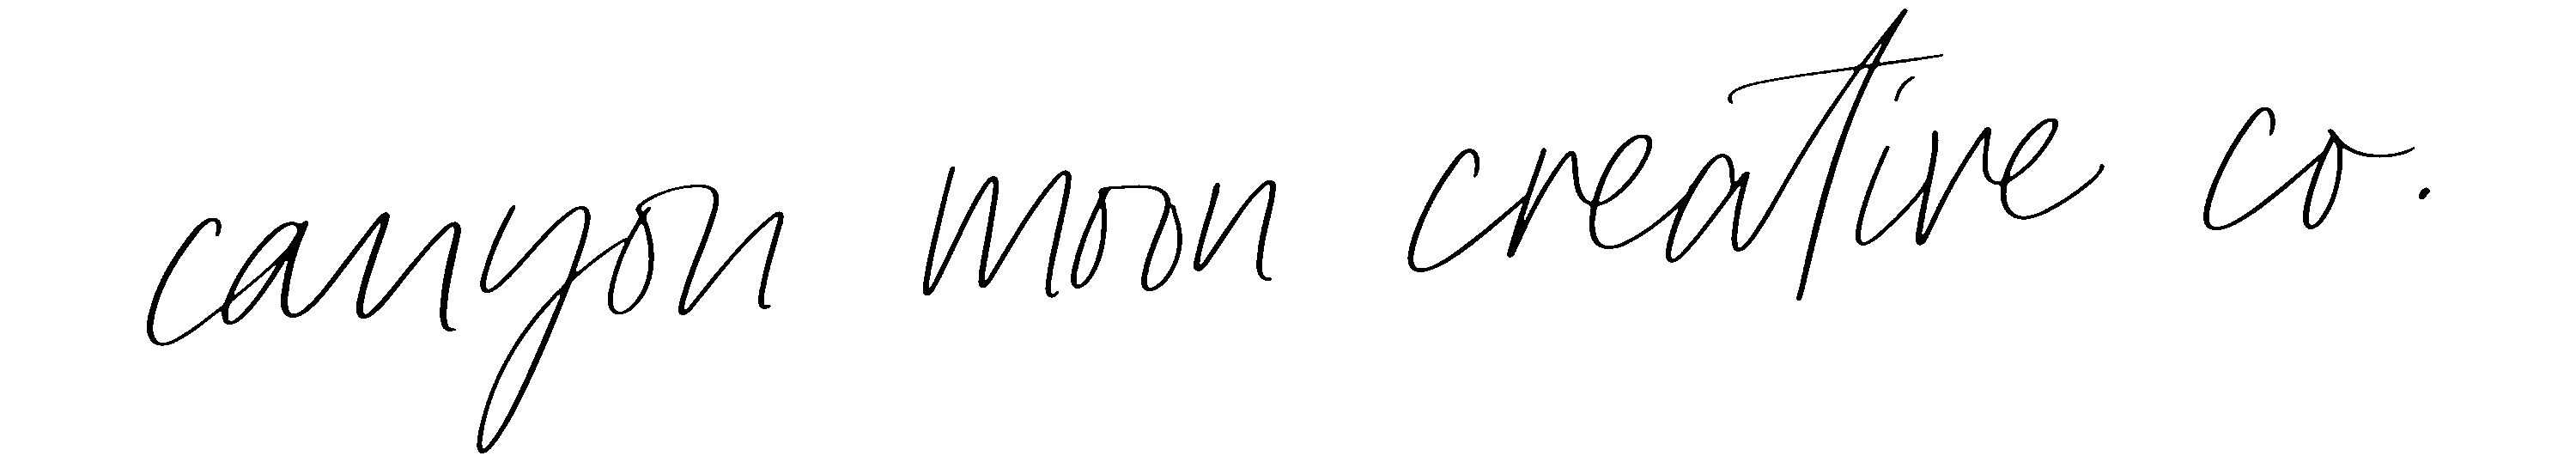 cm gif logo